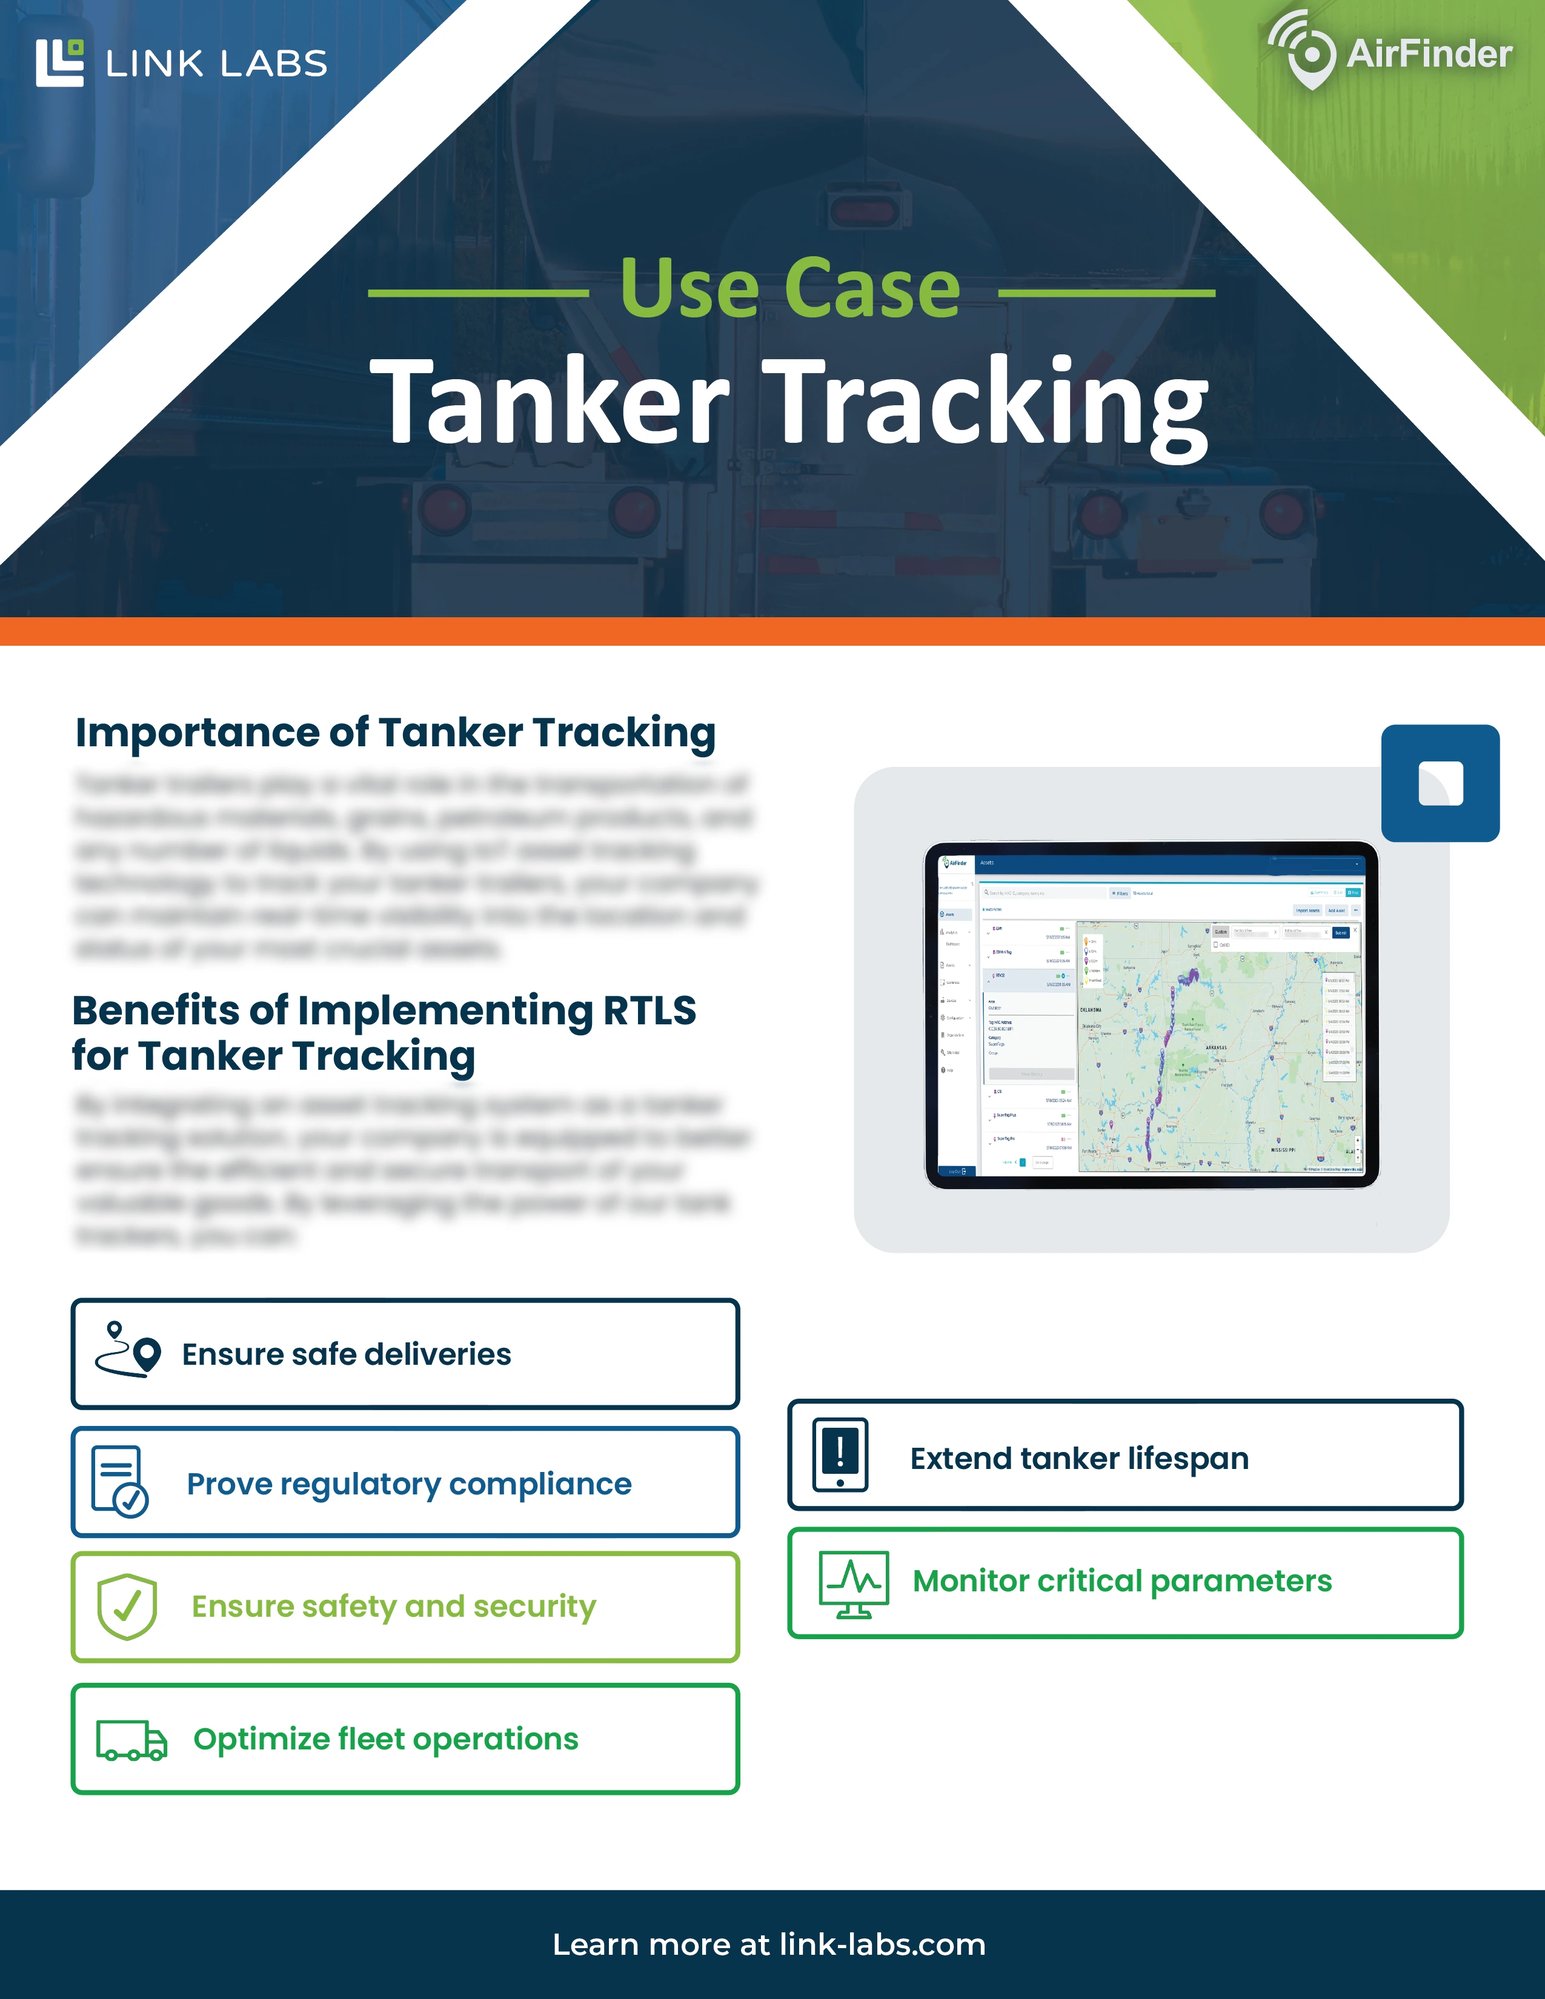 Tanker Tracking